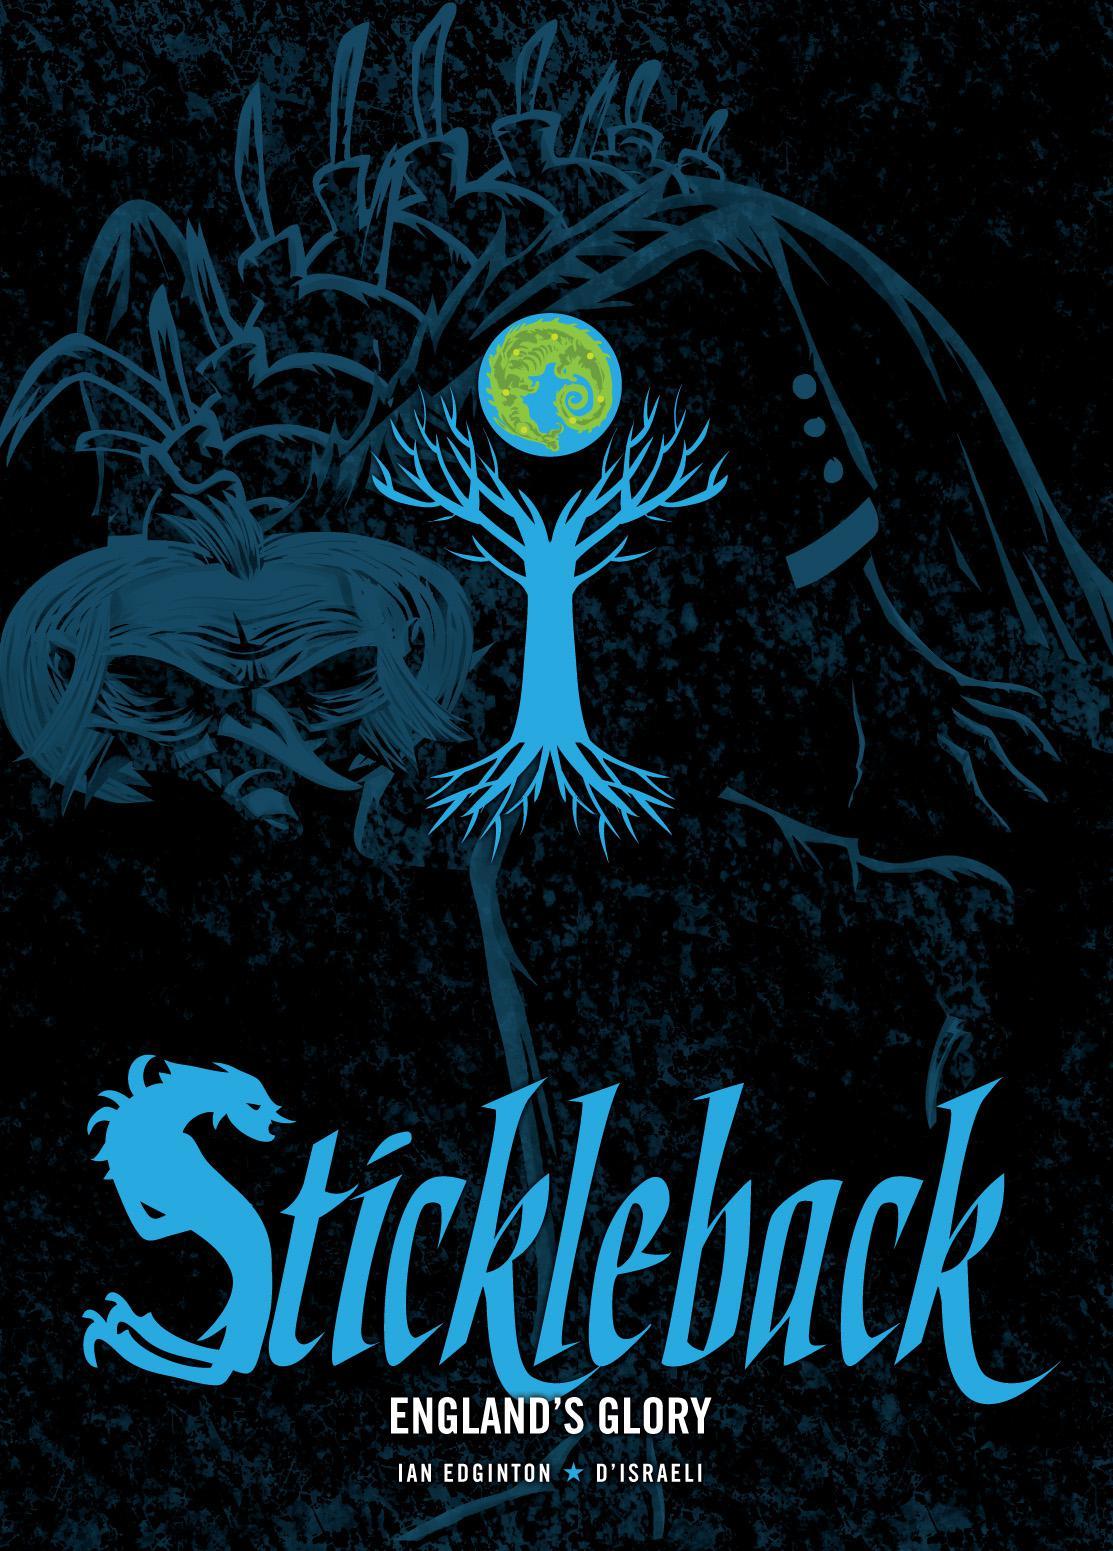 Stickleback Graphic Novel